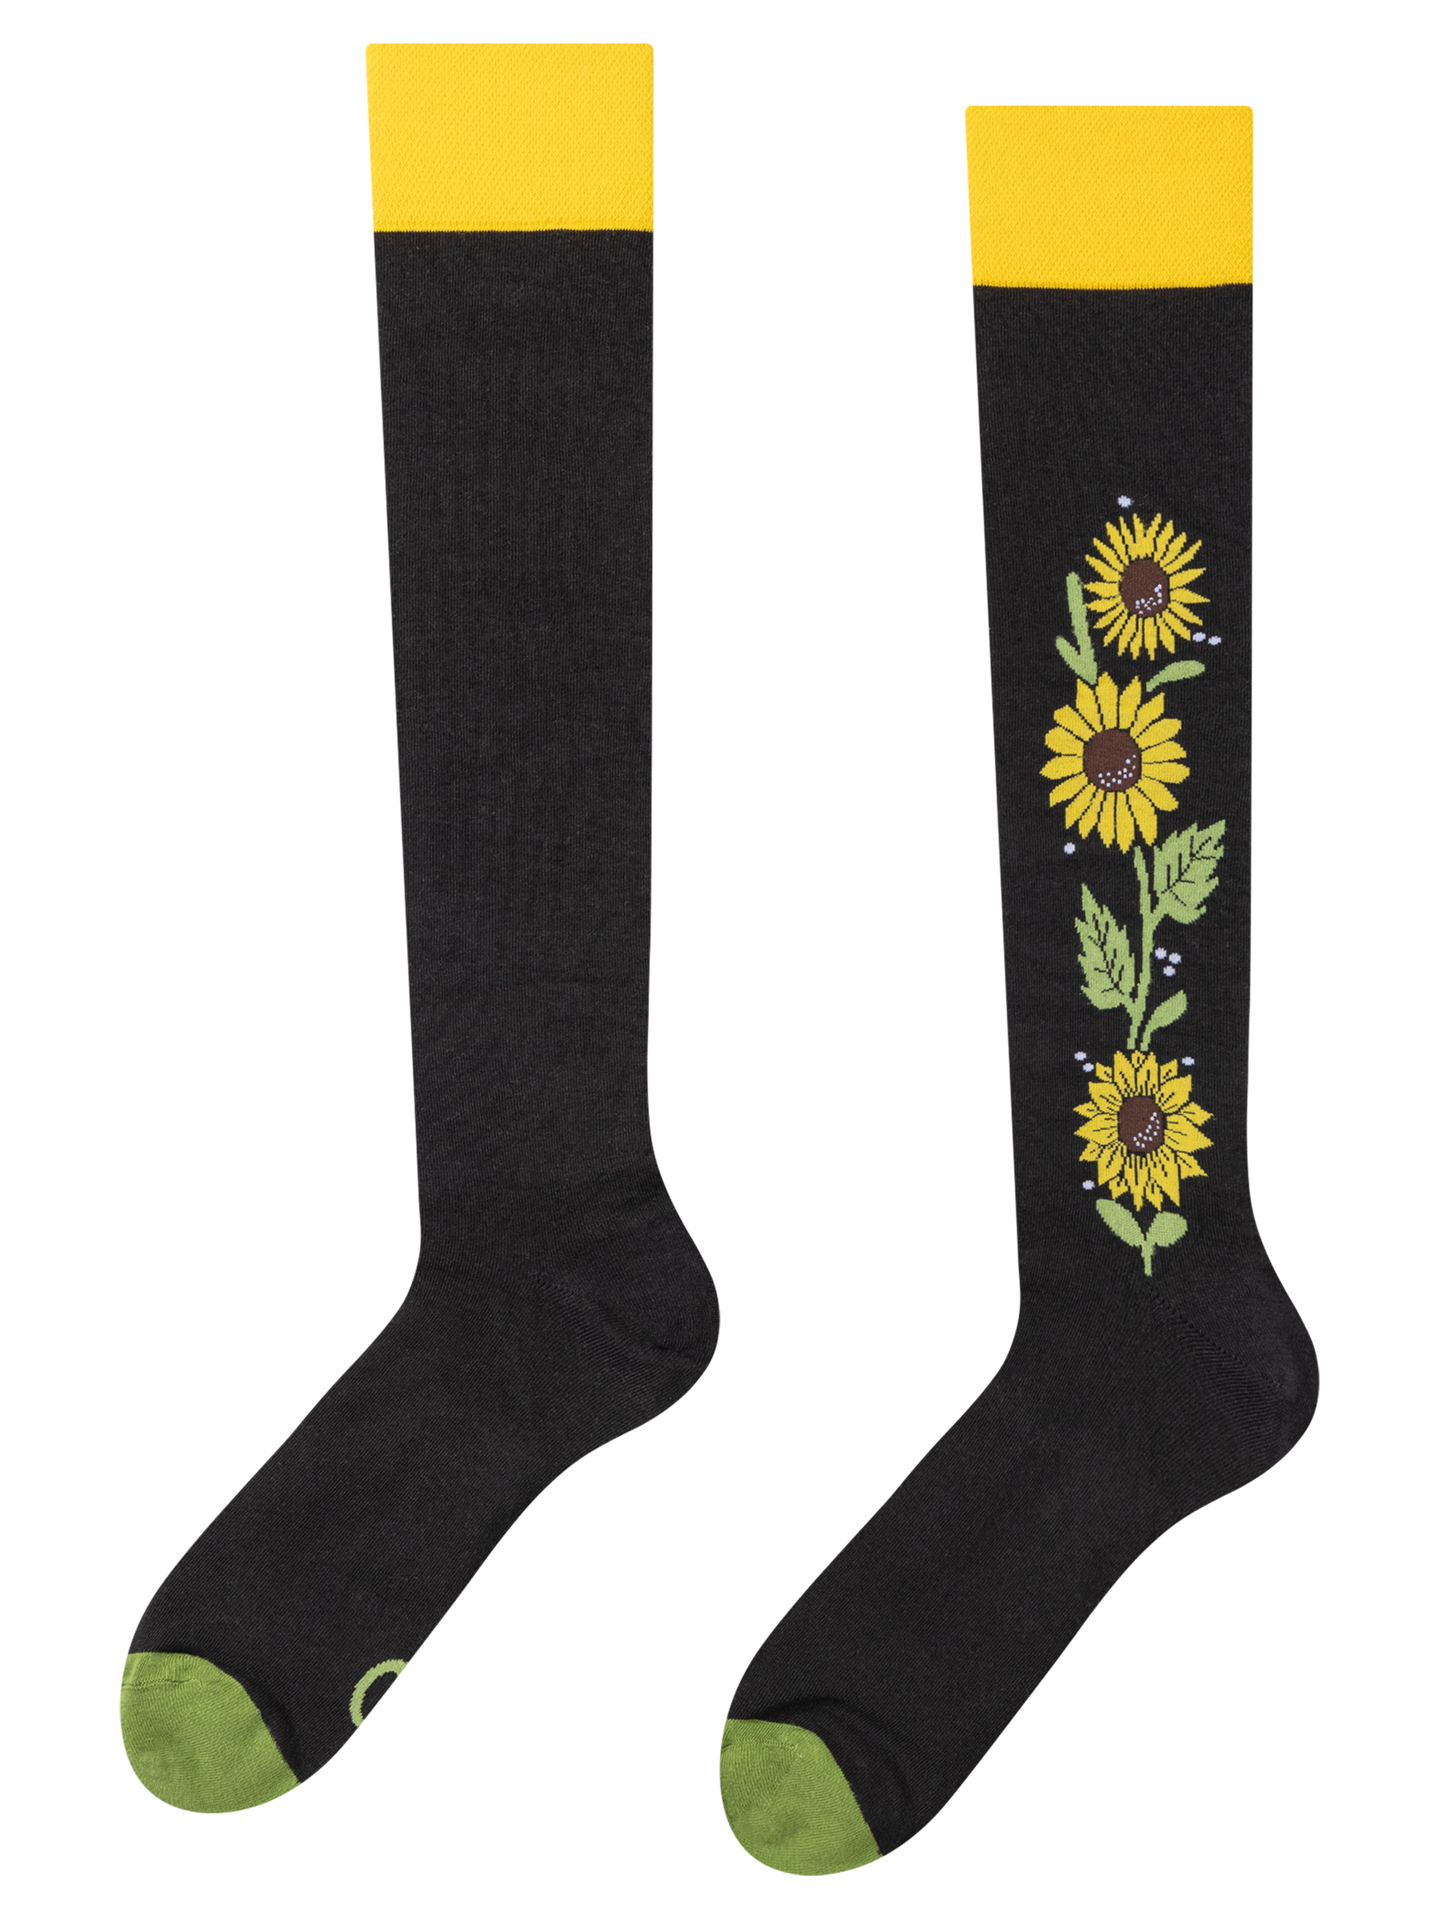 Knee High Socks Sunflowers at Night